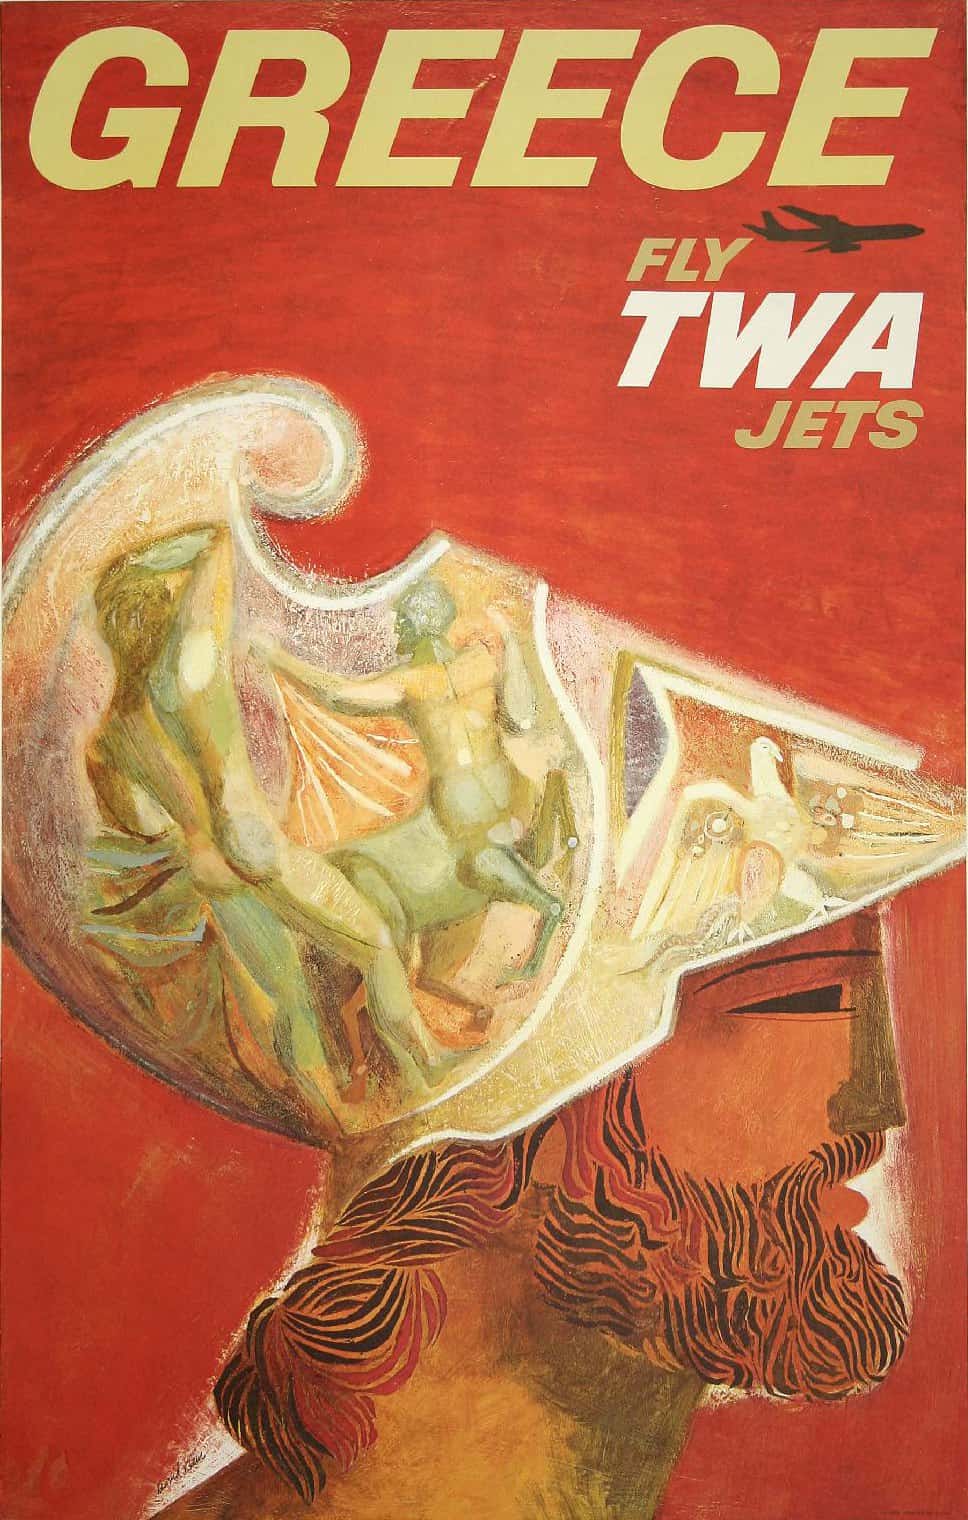 TWA poster David Klein